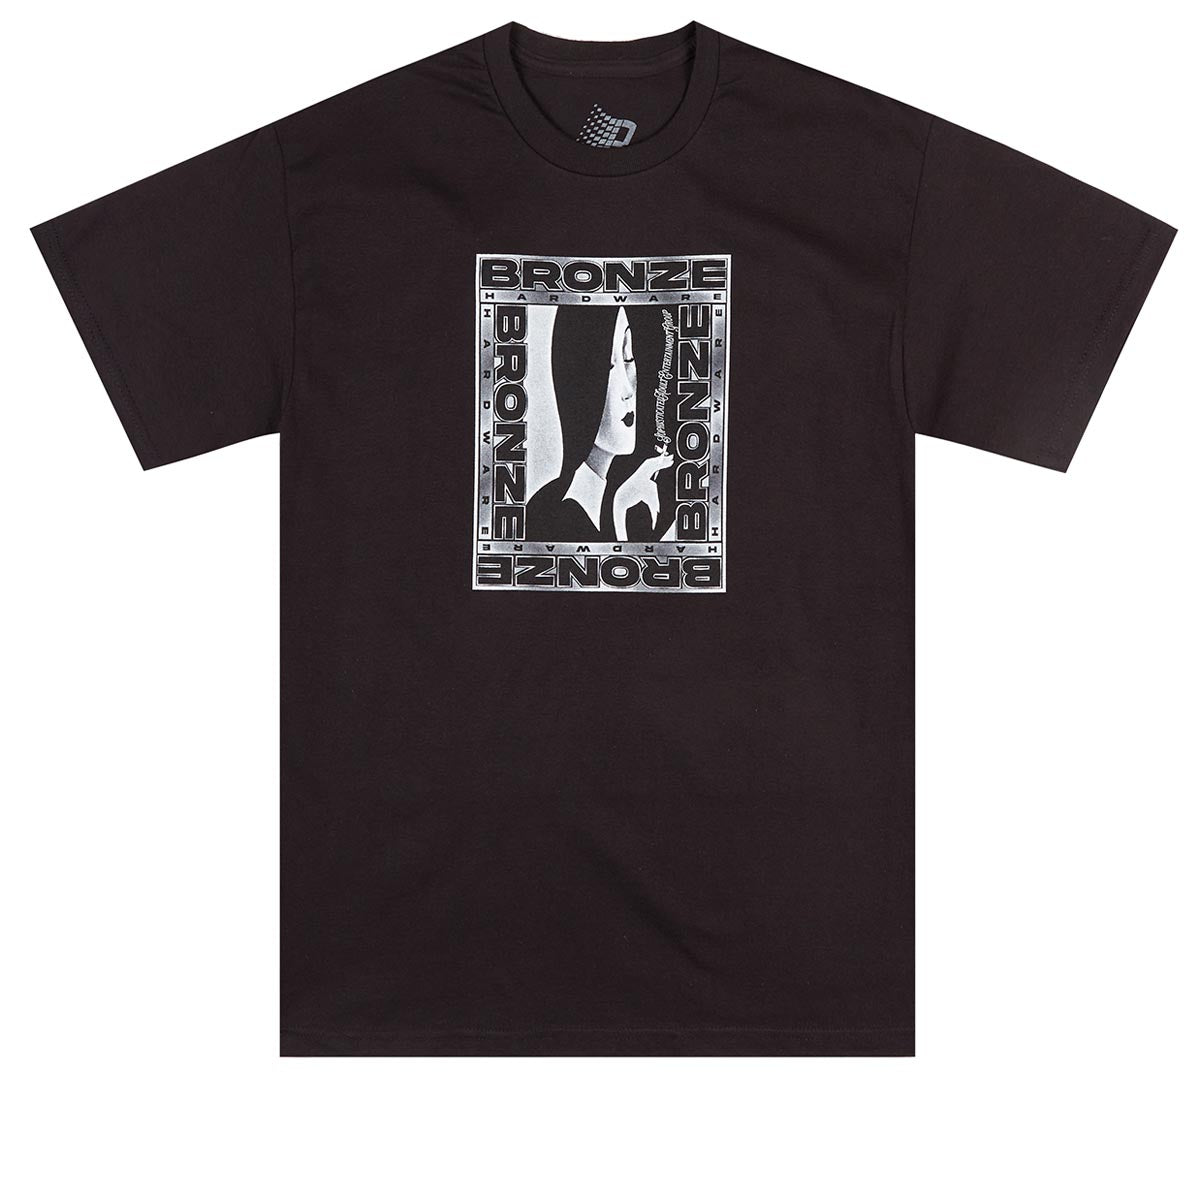 Bronze 56k Church T-Shirt - Black image 1